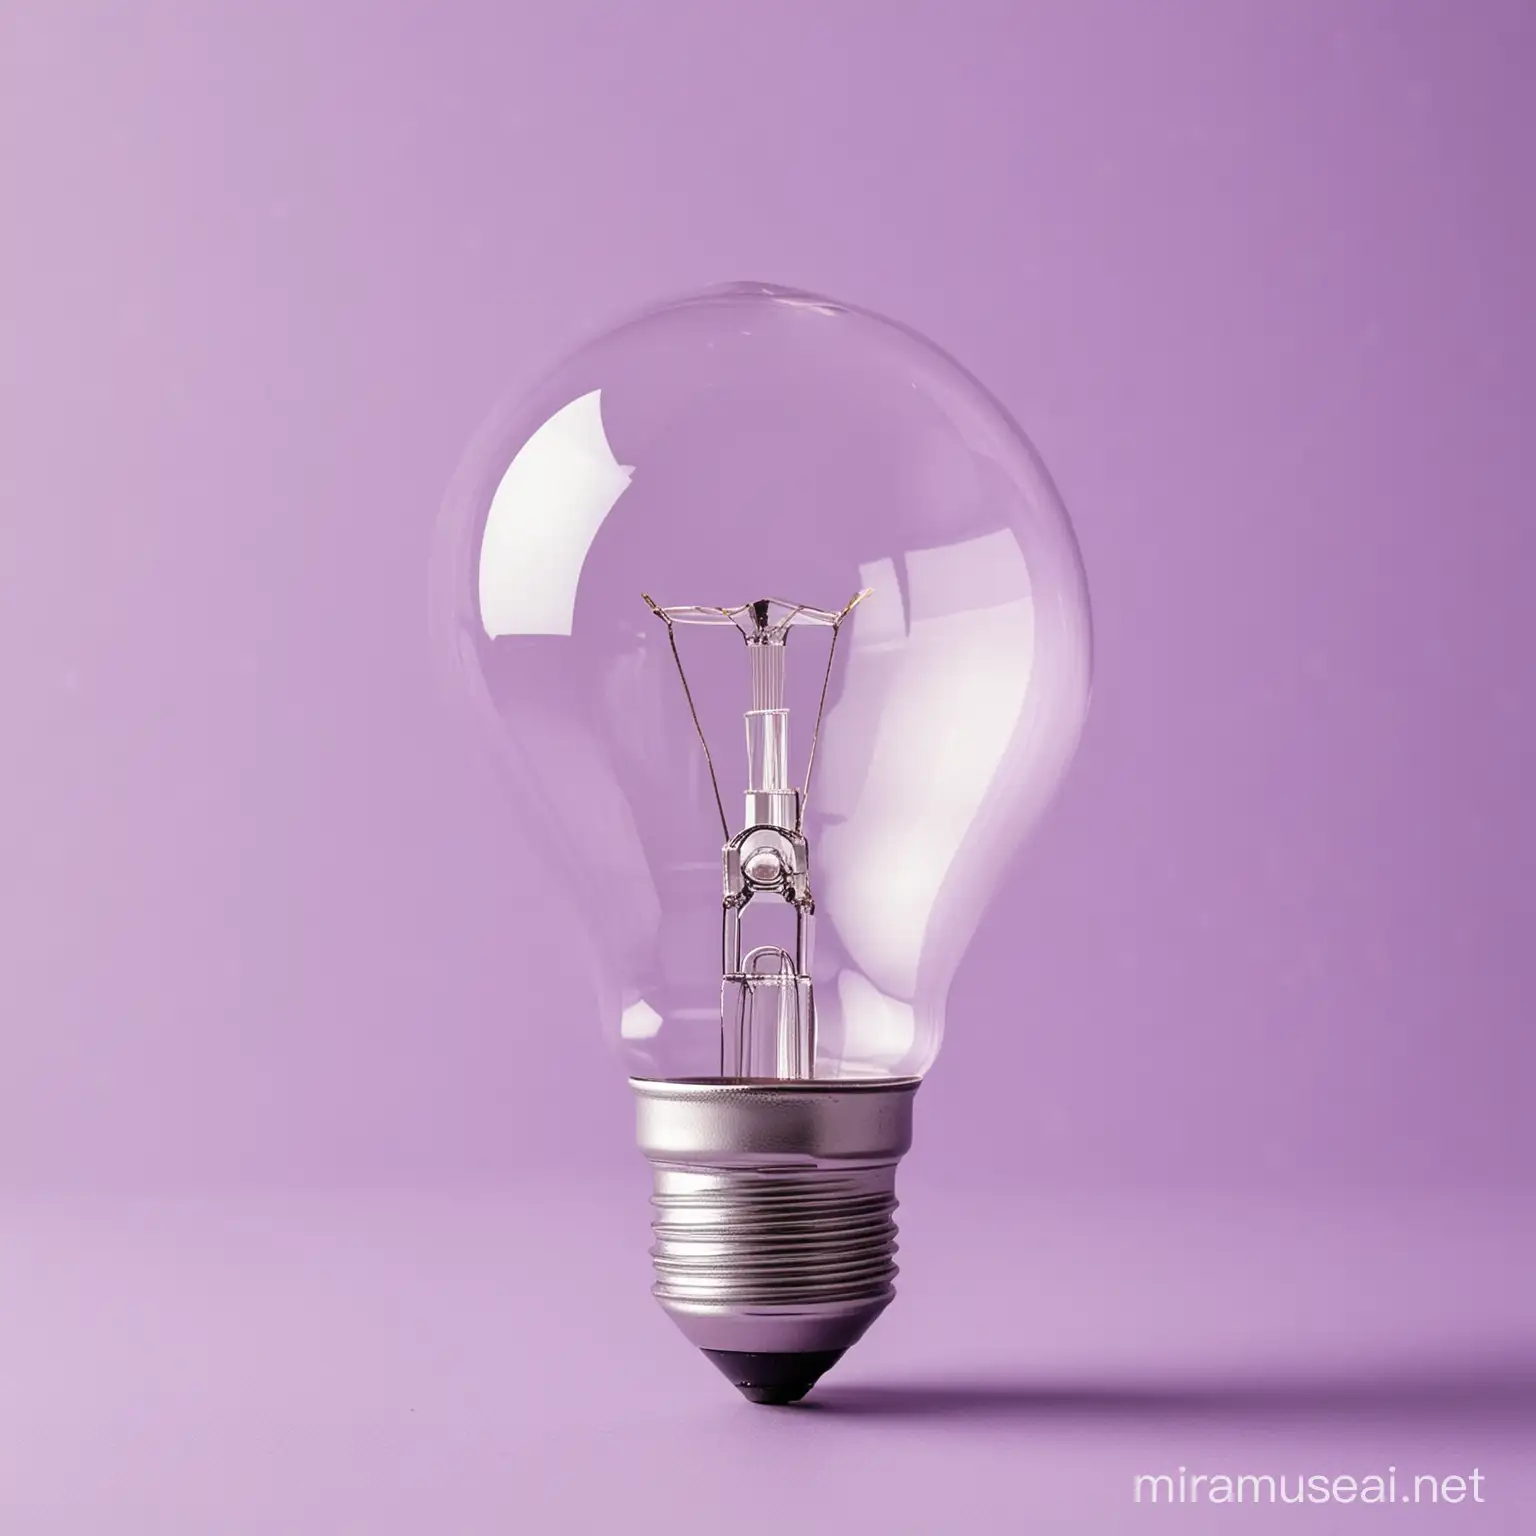 light bulb on pastel purple background
